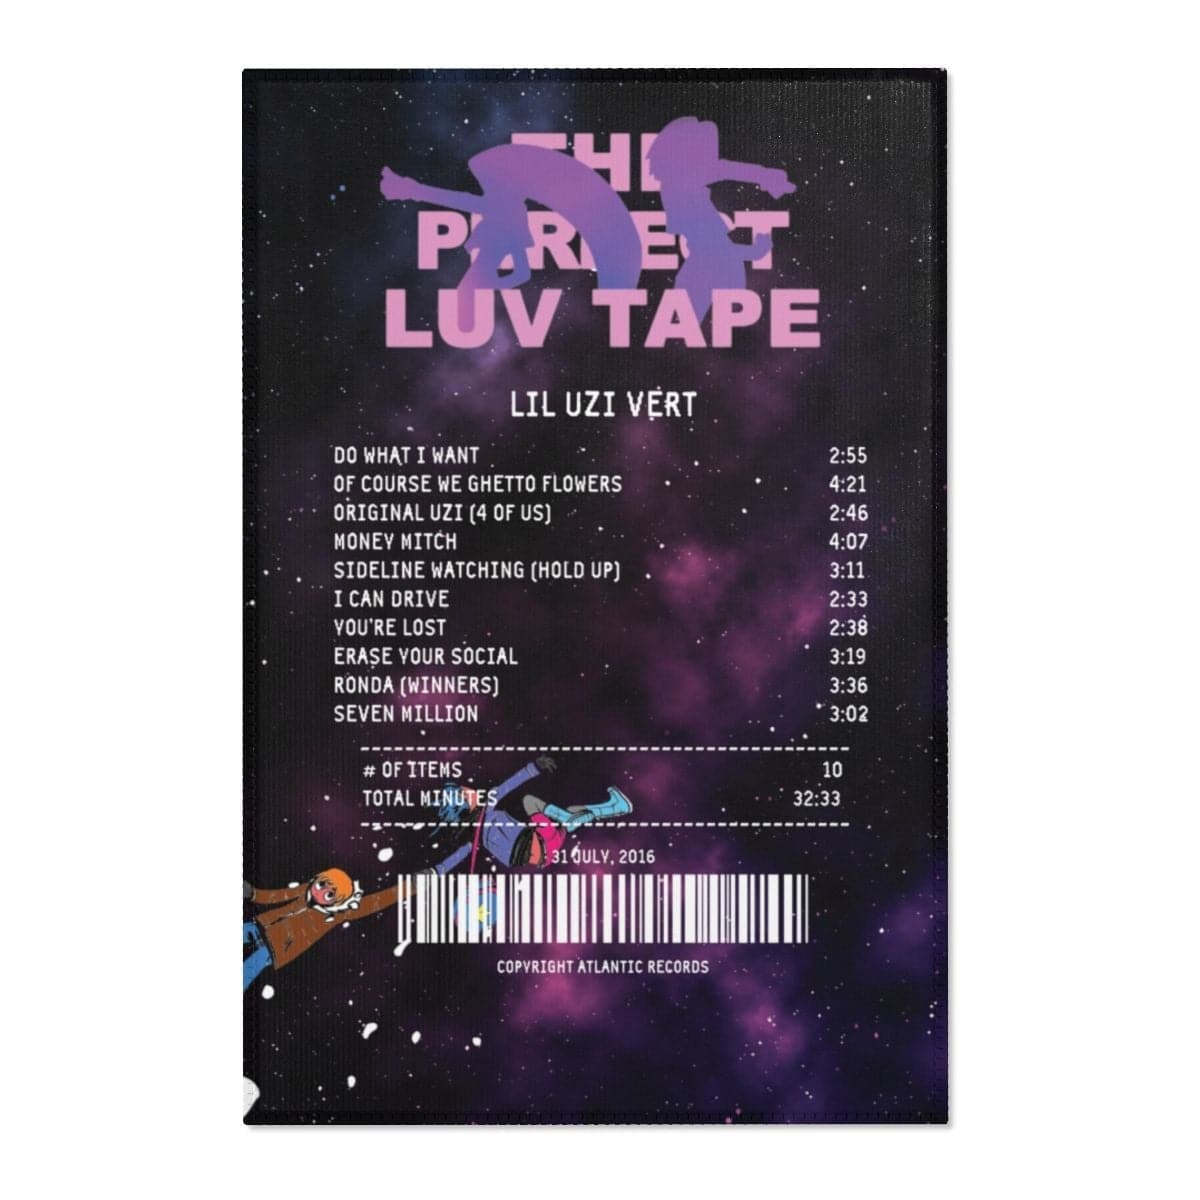 The Perfect Luv Tape - Lil Uzi Vert [Rug]